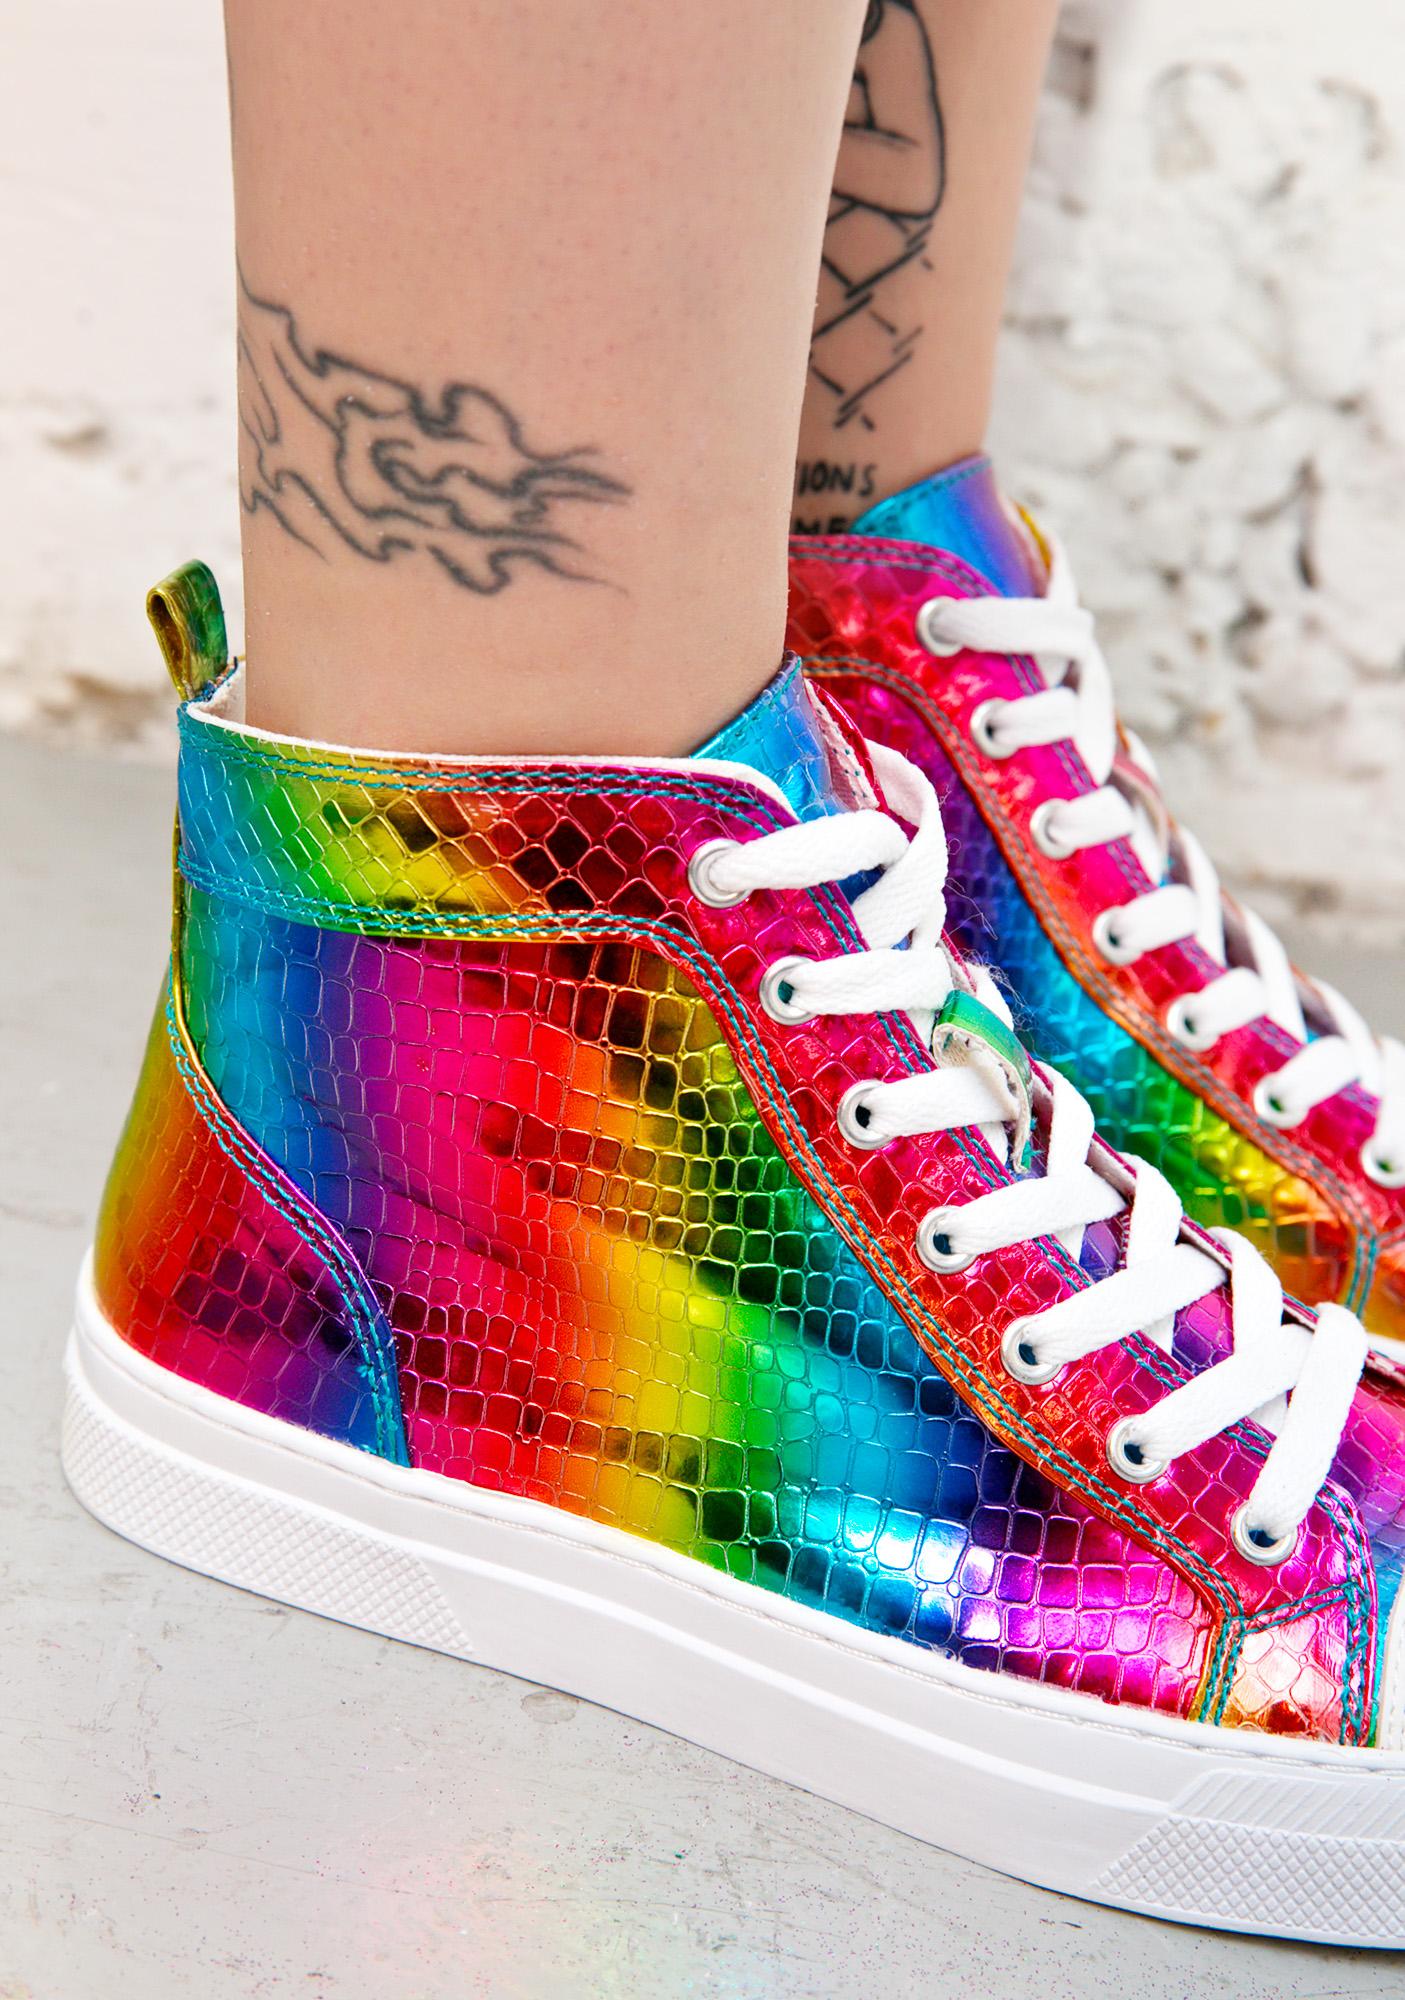 rainbow high top shoes